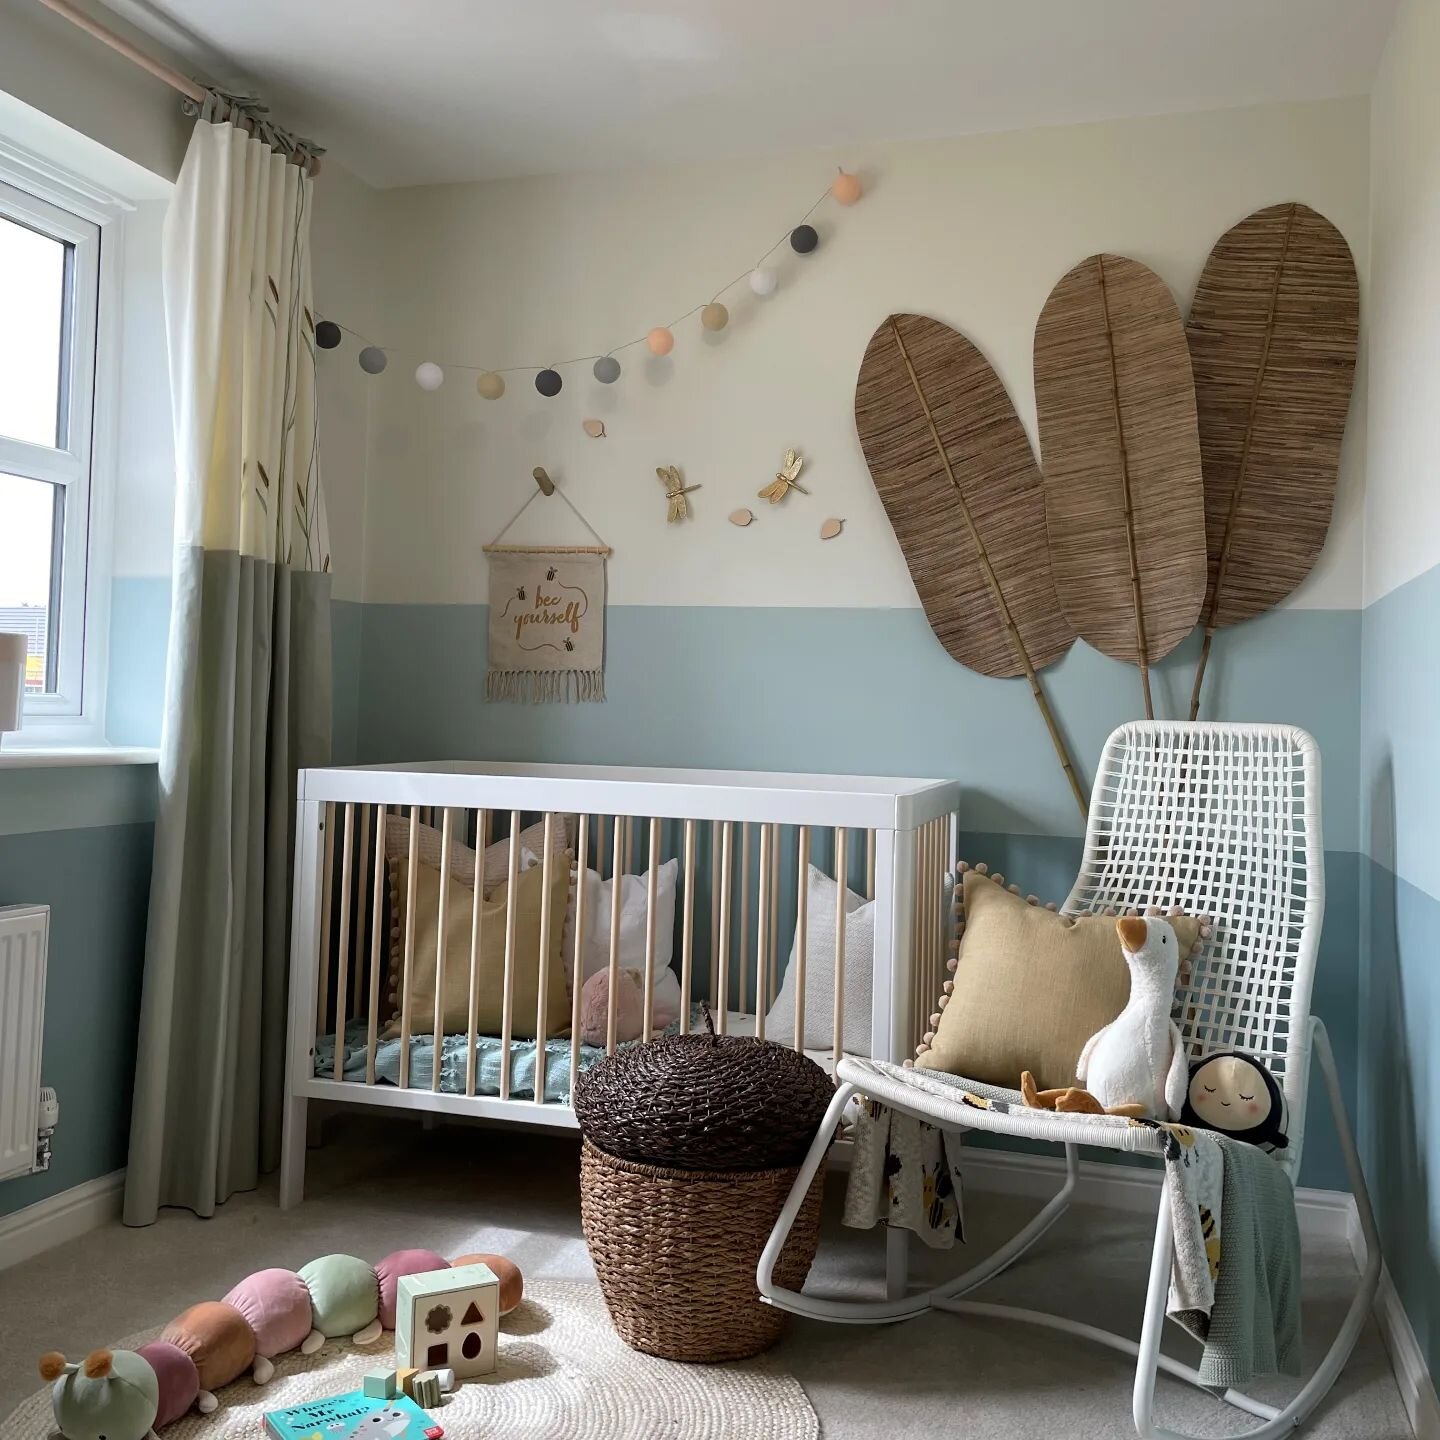 We create goregous spaces for the littlest ones too!
#interiordesign #interiors #interiorstyling #nurserydecor #nurseryinspo #baby #newhome #homeinspo #homedecor #showhome